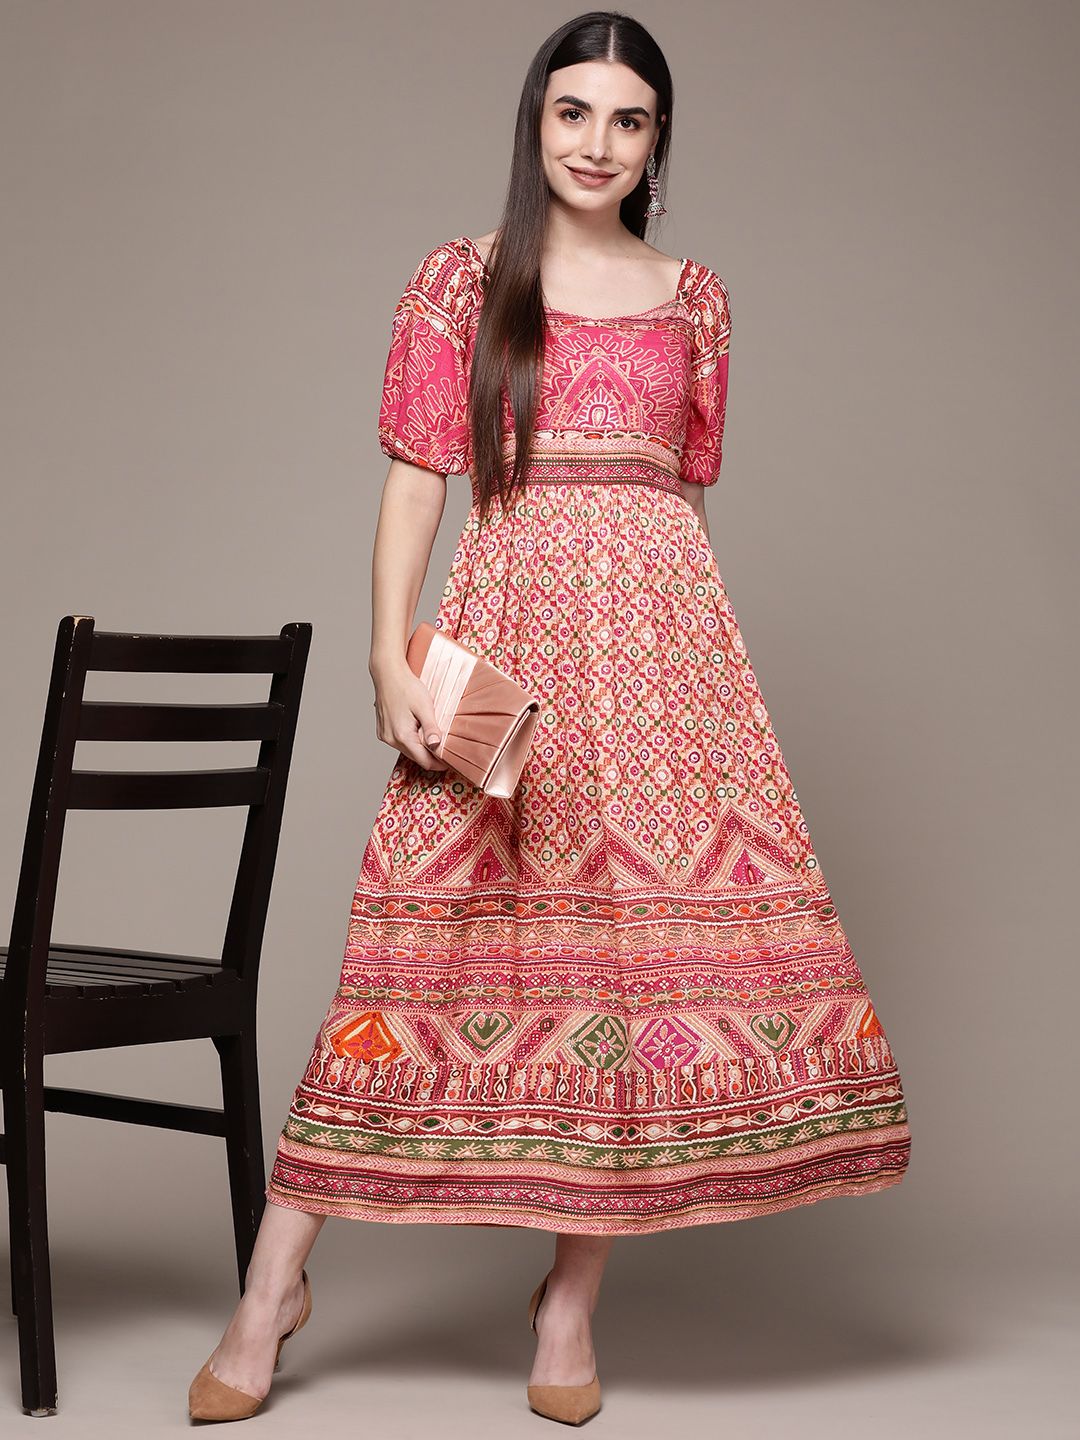 aarke Ritu Kumar Pink & Green Ethnic Motifs A-Line Midi Dress Price in India